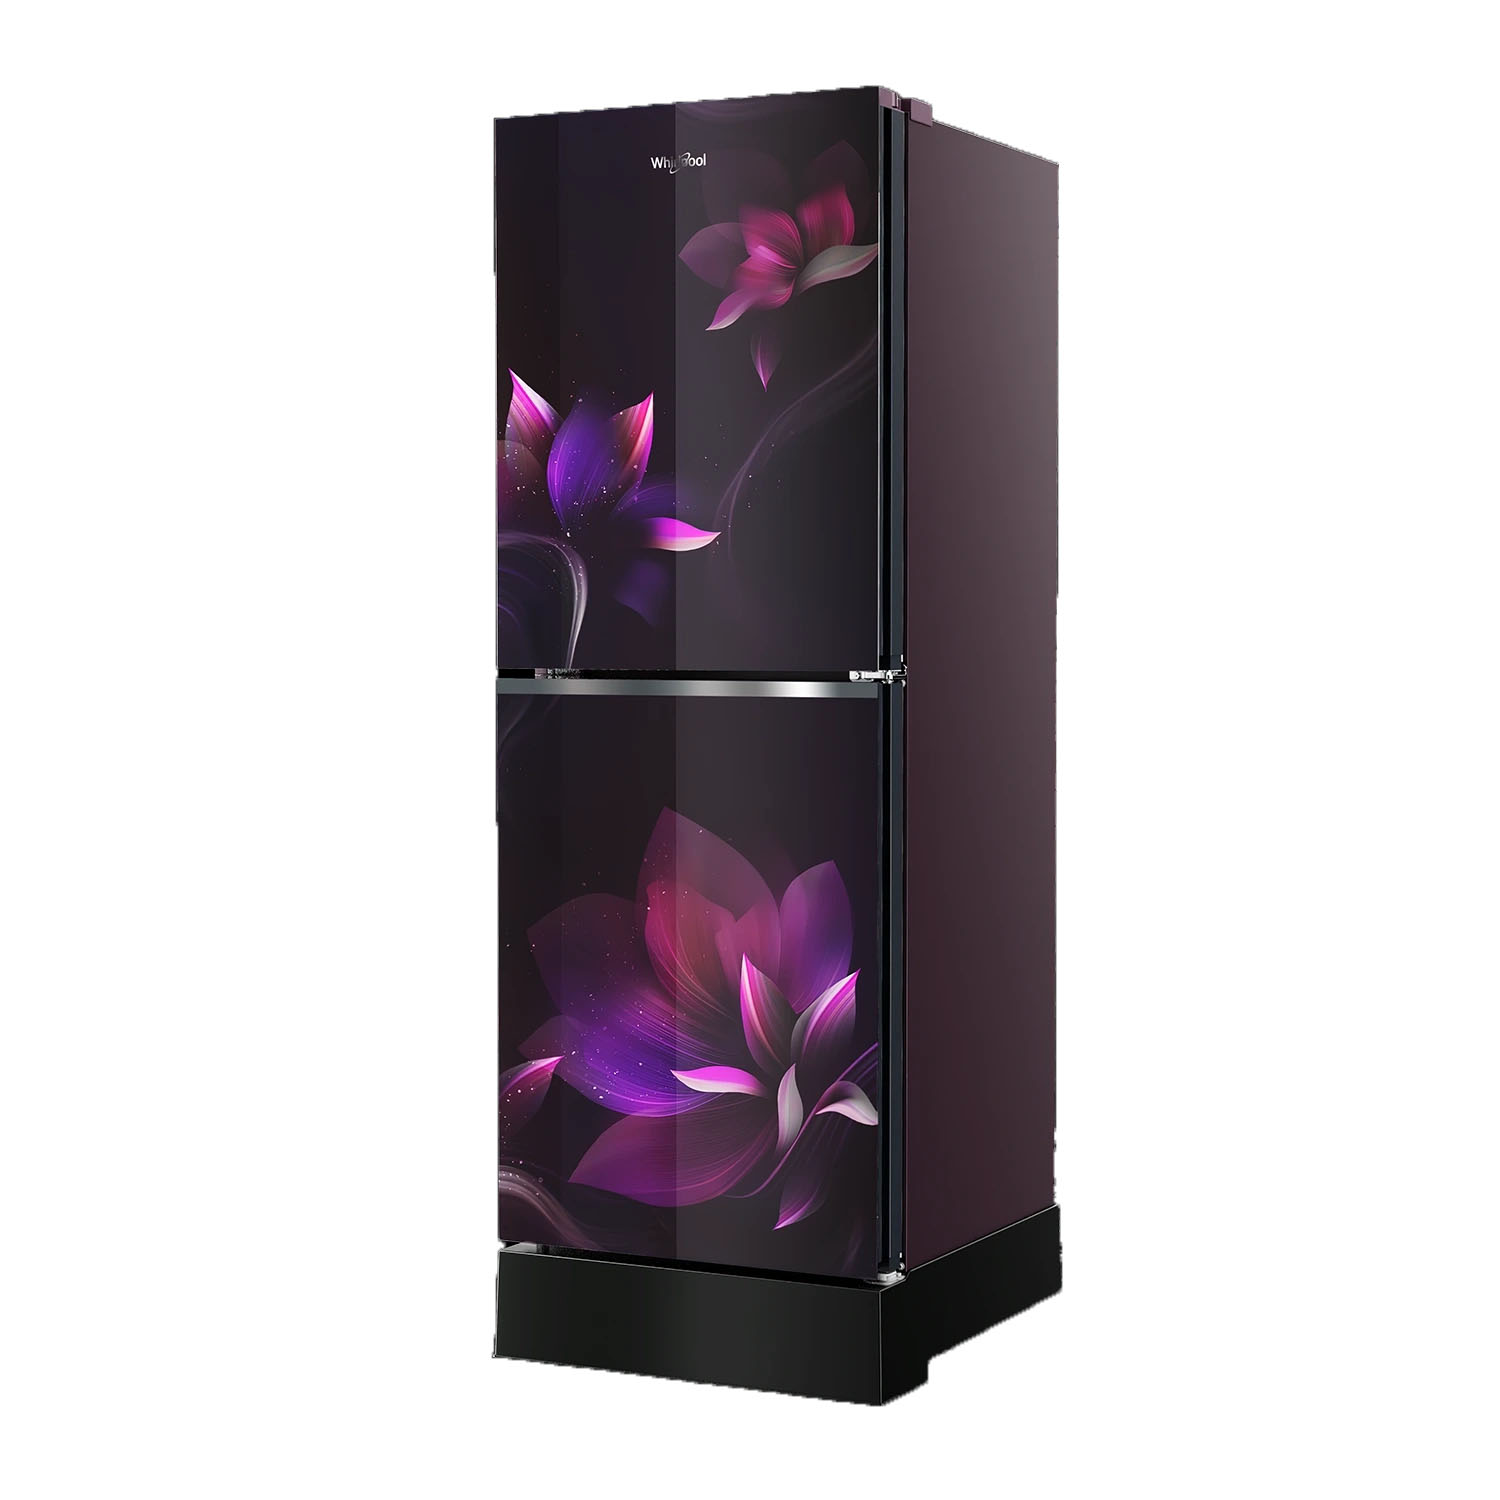 WHIRLPOOL 278 Liter Refrigerator FreshMagic Pro Inv Floret Purple